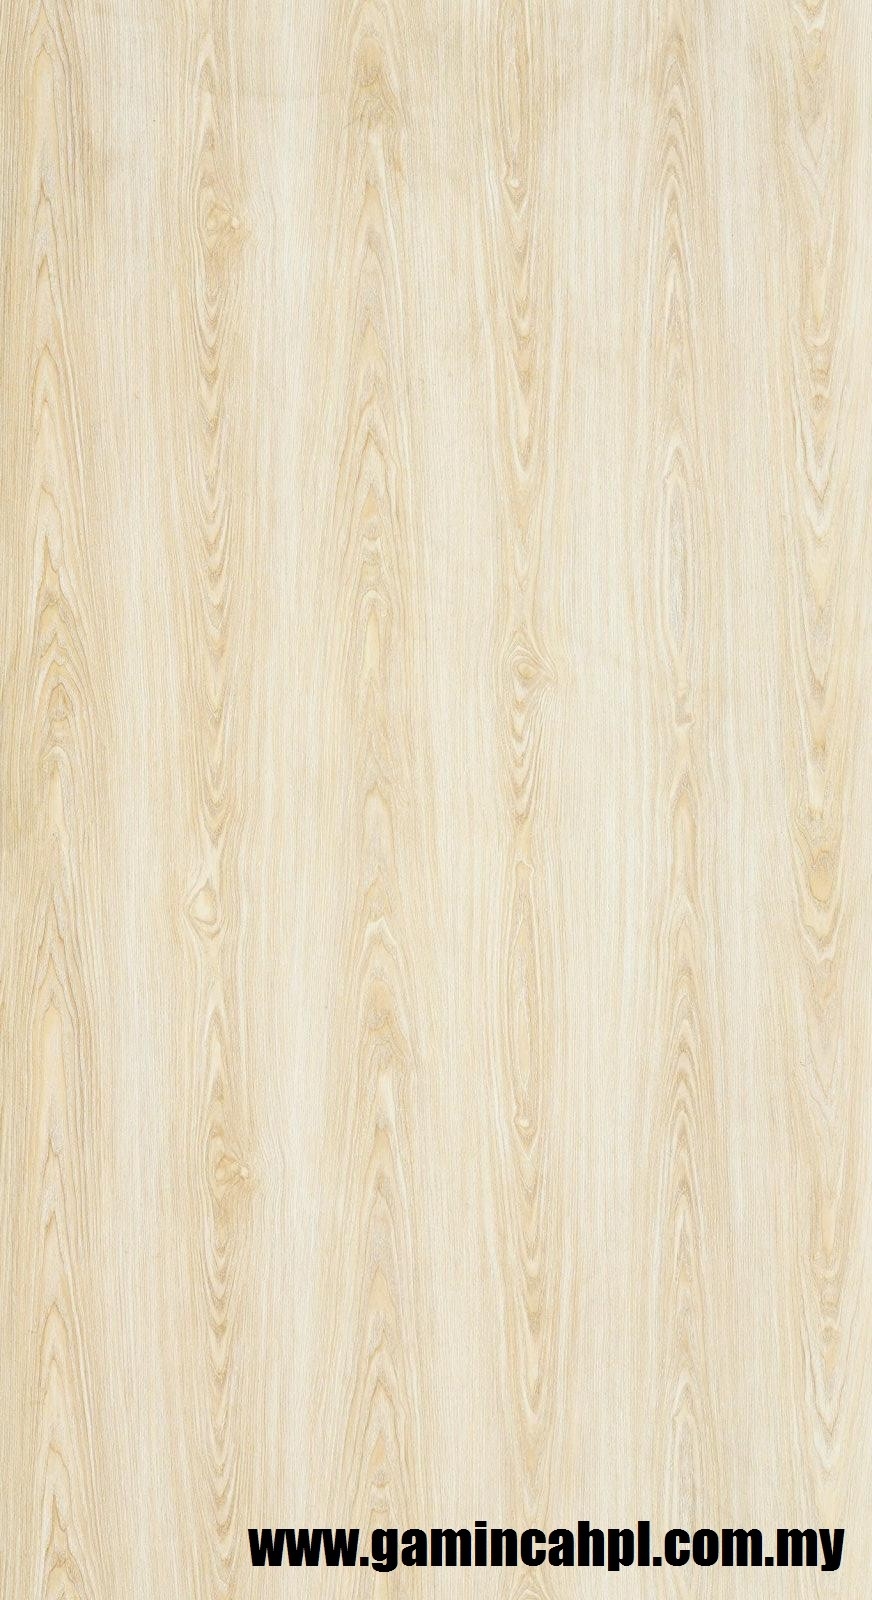 GM10-8053 SILVER OAK Authentic Wood Series Laminate Flooring Choose Sample / Pattern Chart